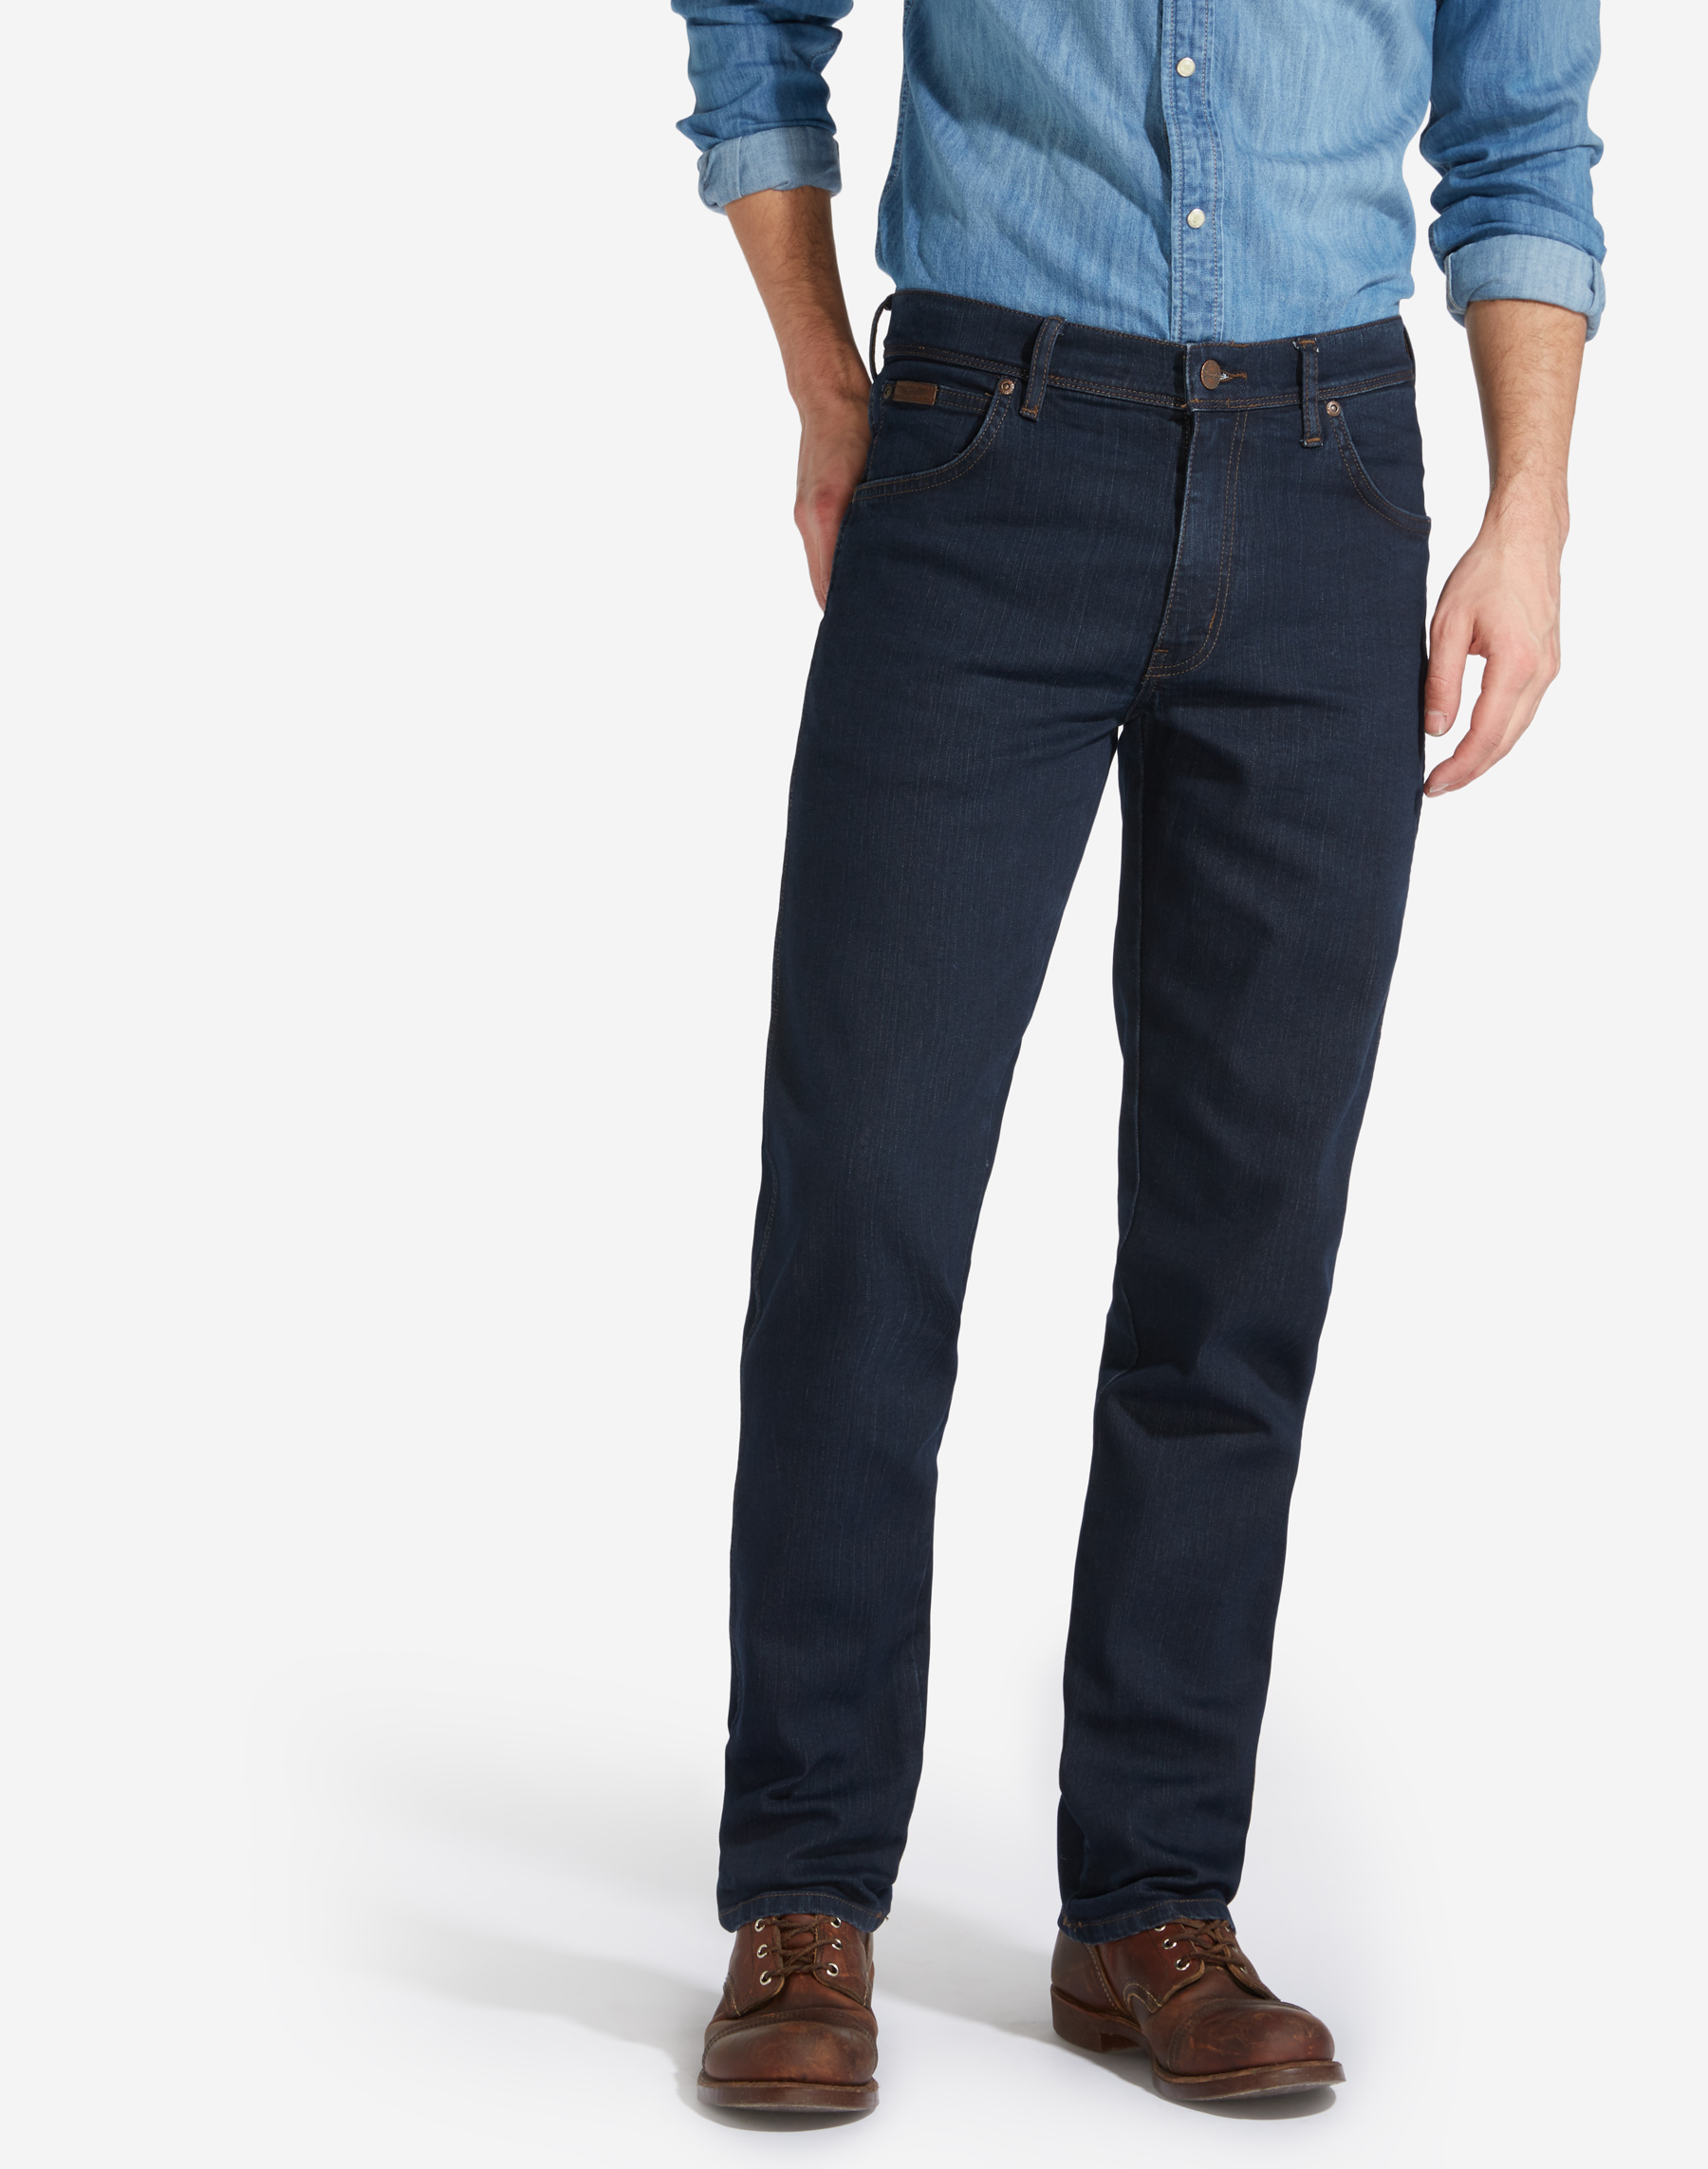 Wrangler Texas straight pantalons texans d'home W12175001 blau negrós